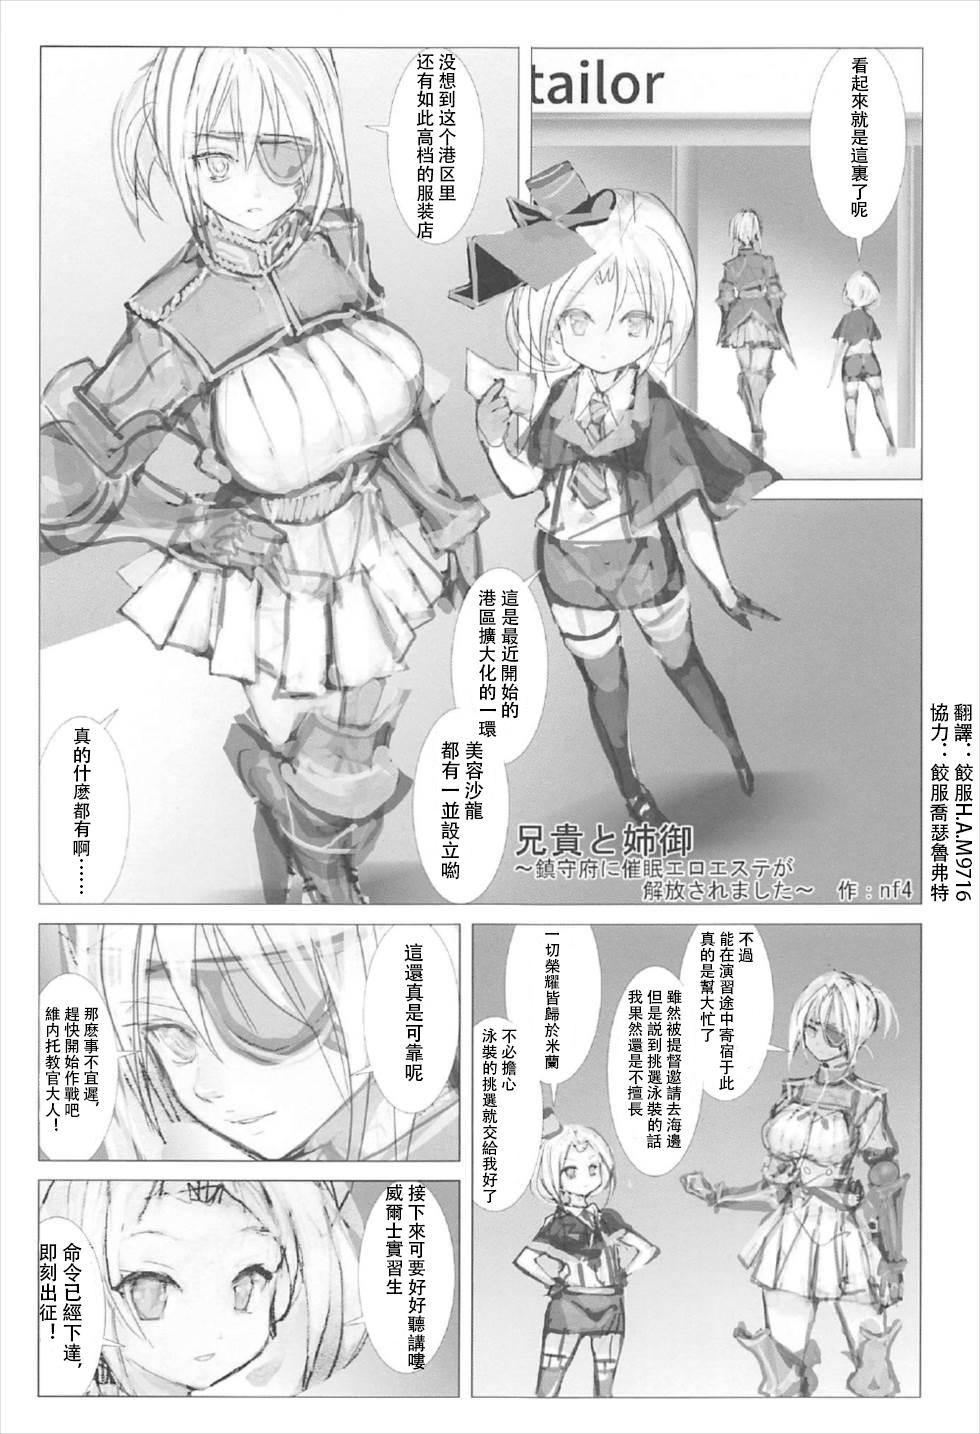 Furry Aniki to Anego - Warship girls Shesafreak - Page 2